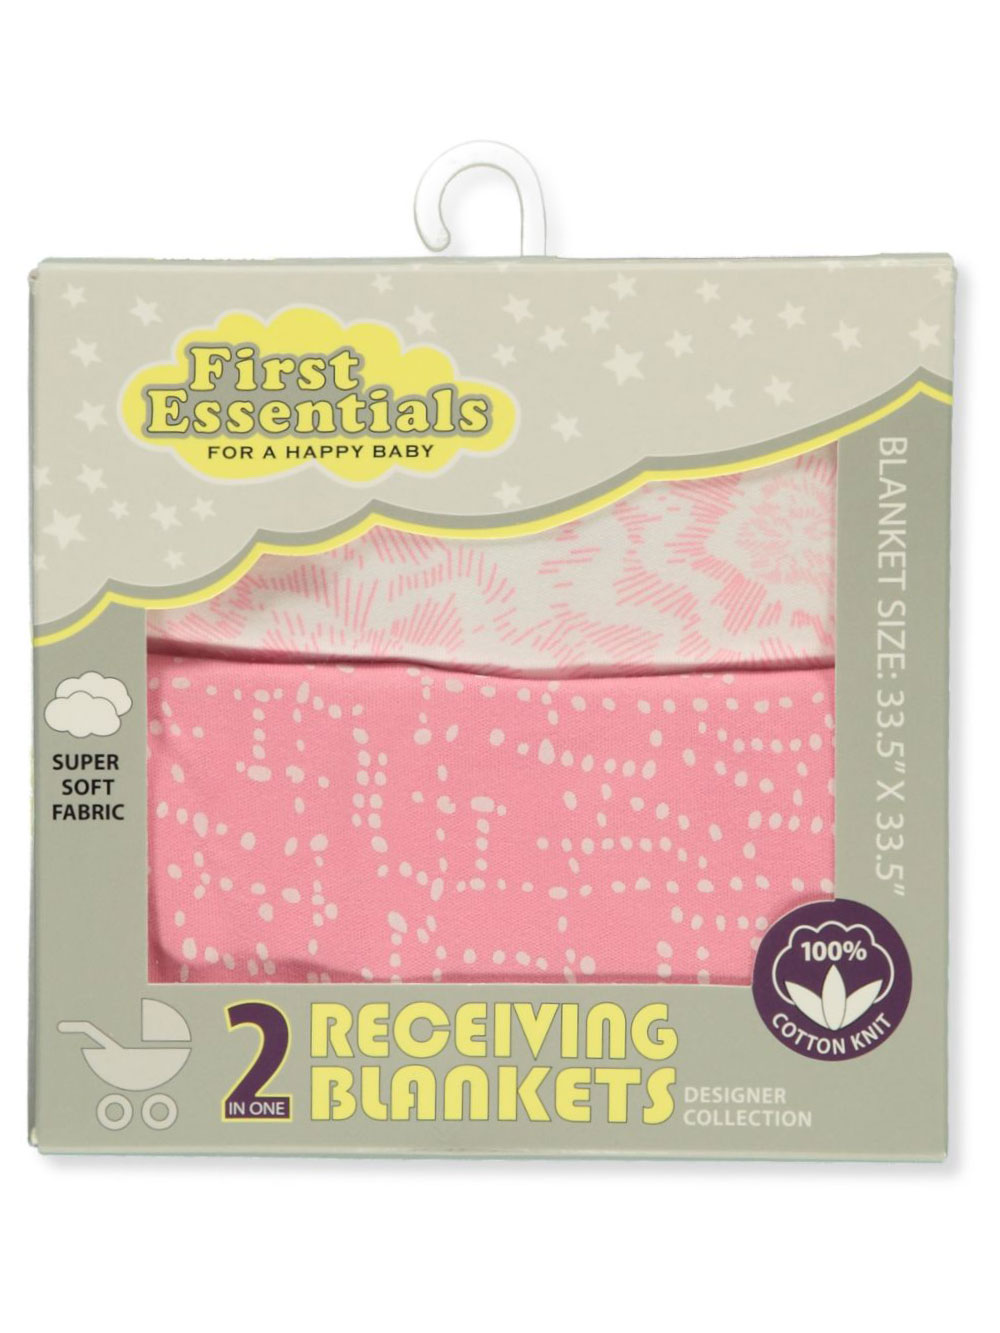 First Essentials Receiving Blankets